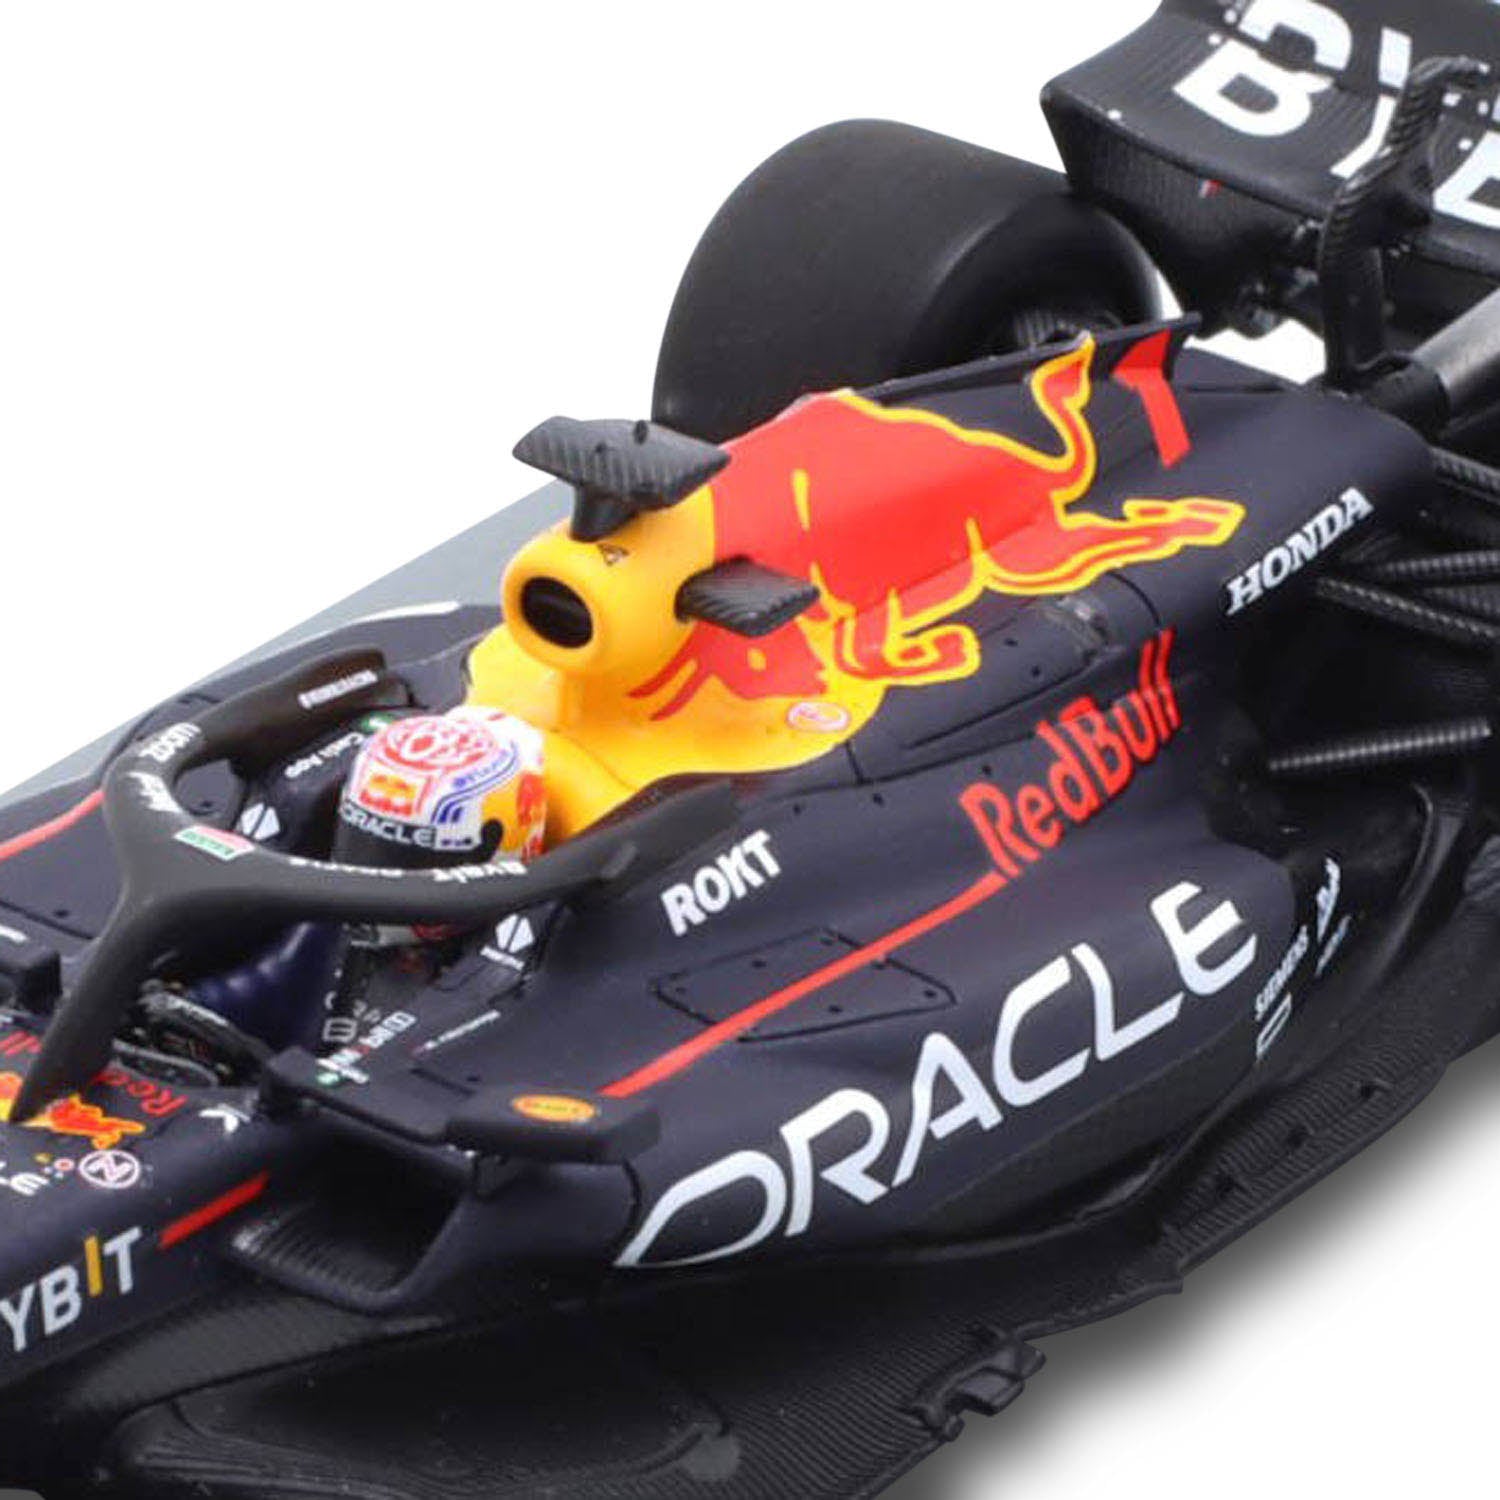 RB19 Max Verstappen #1 Bahrain GP Winner 1:43 Scale - Red Bull Racing - Fueler store